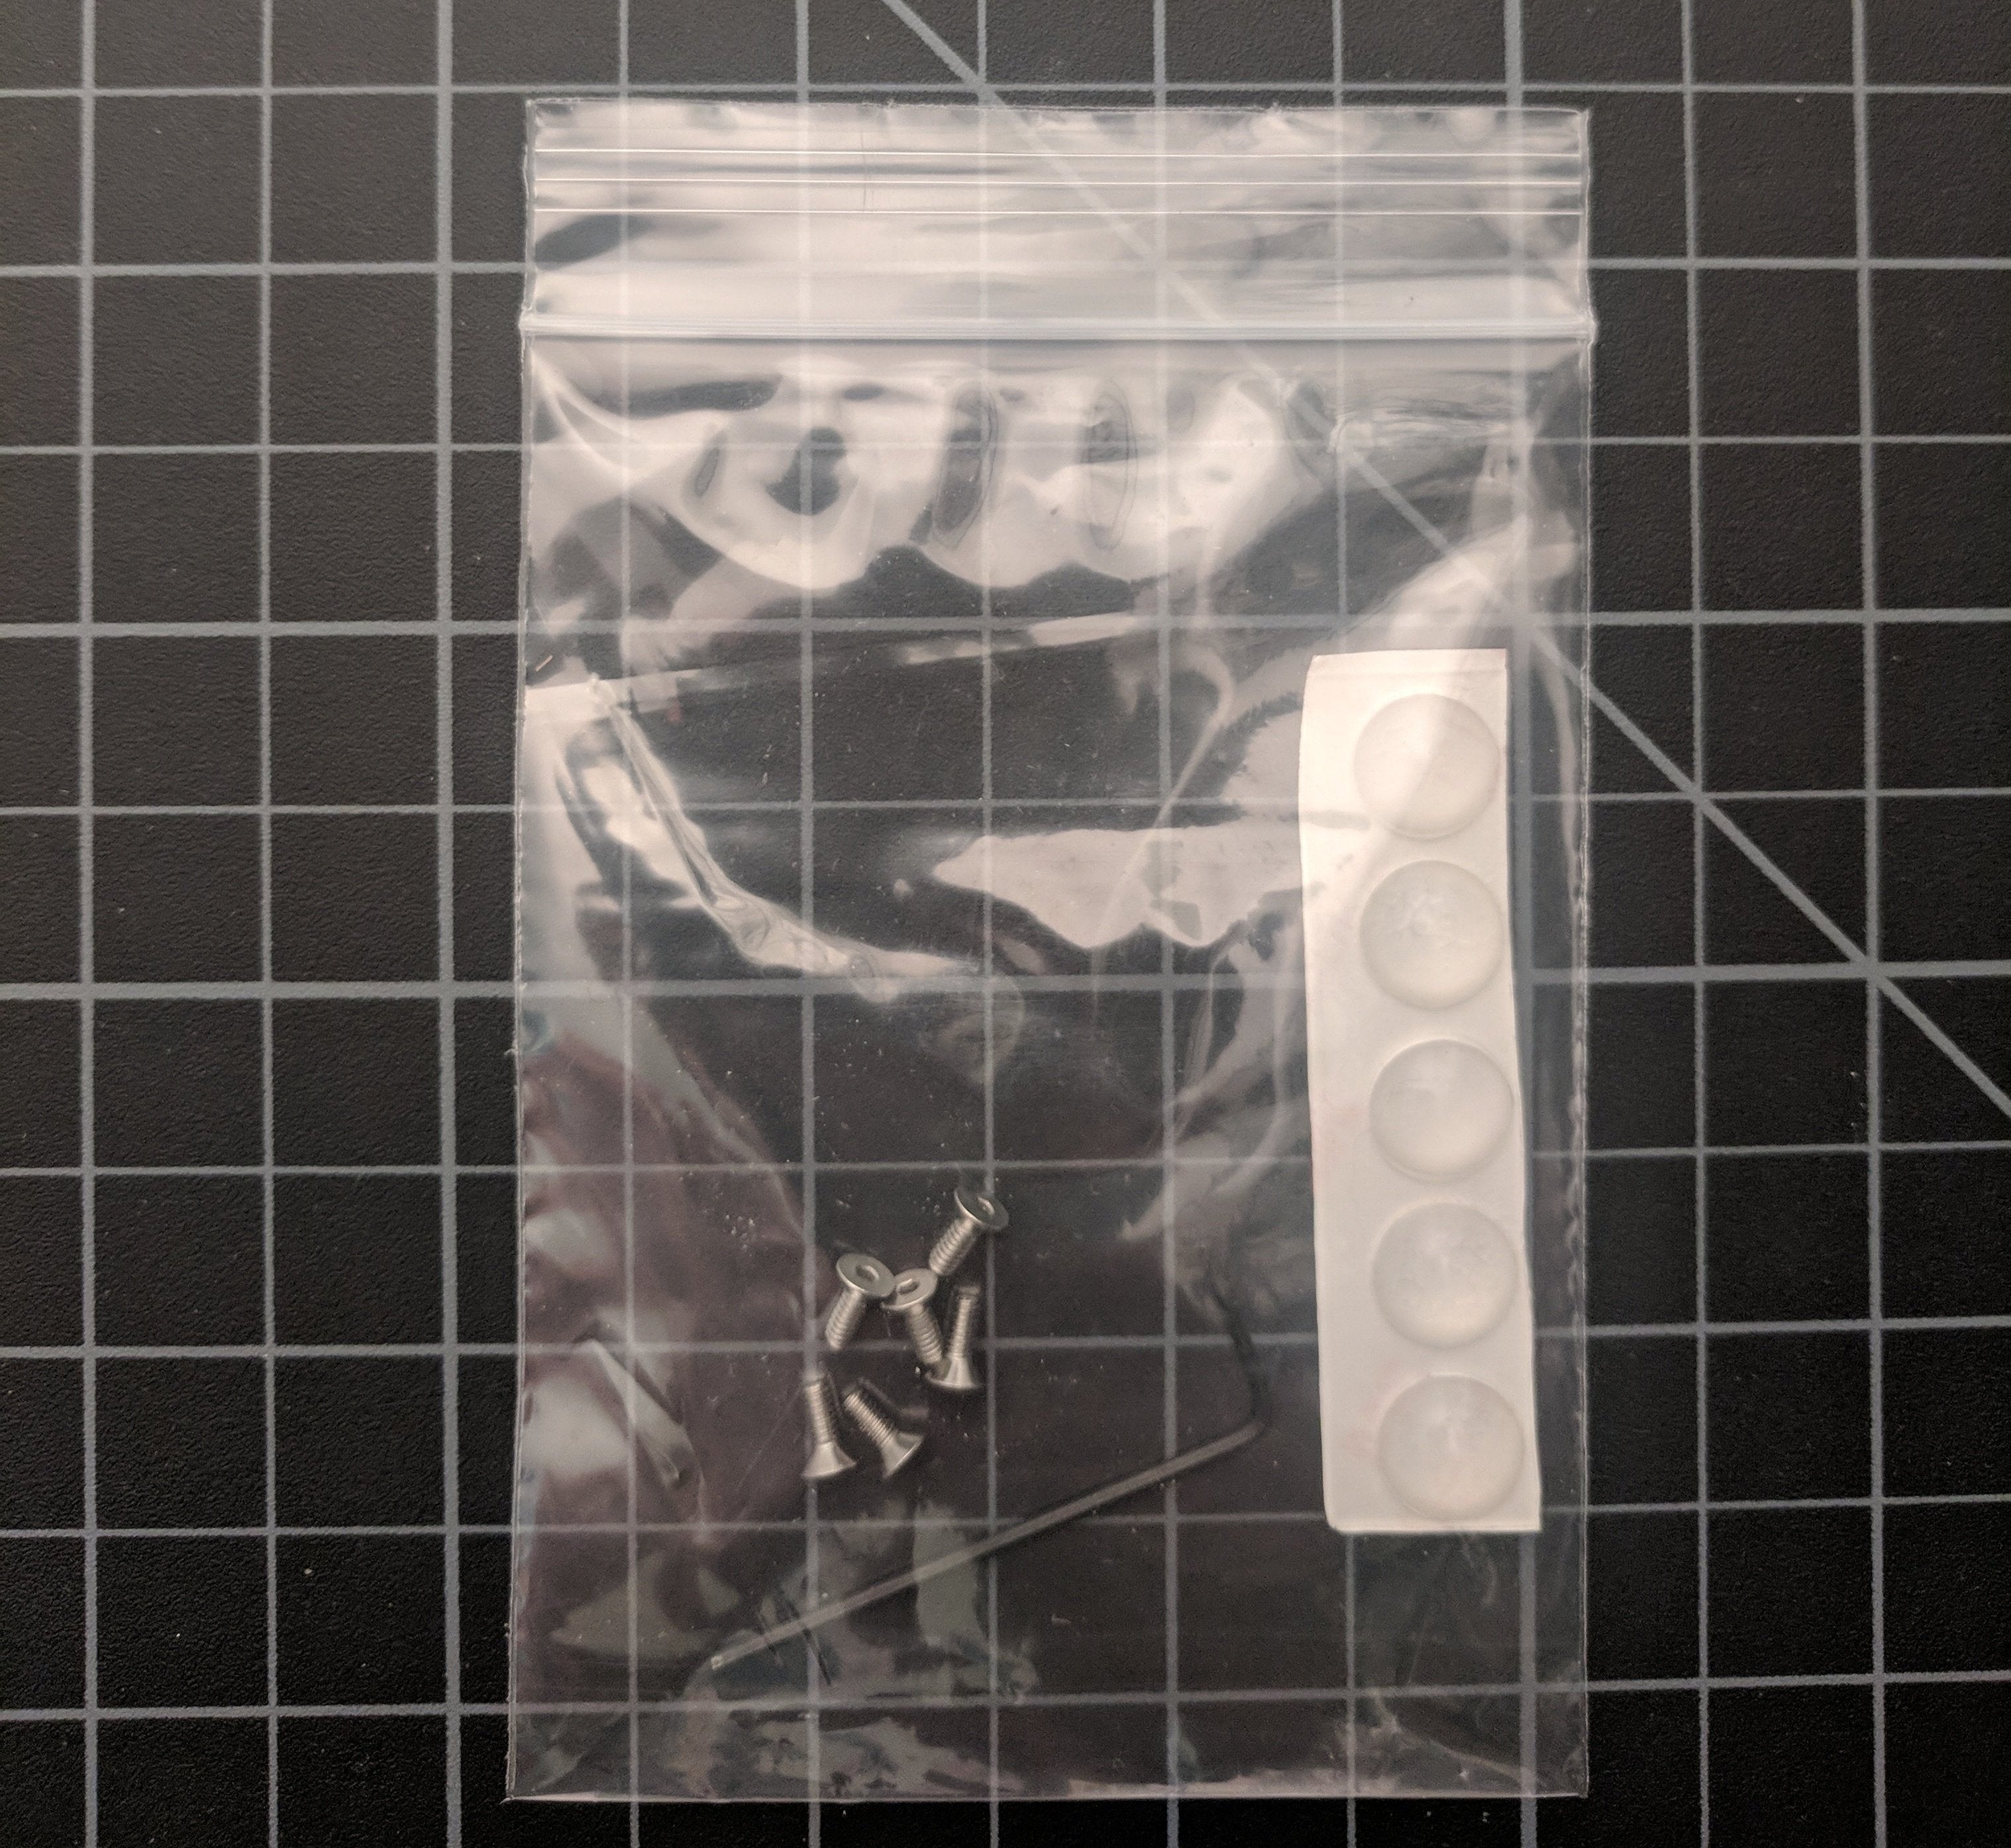 Planck Hi-Pro Clear Acrylic Case